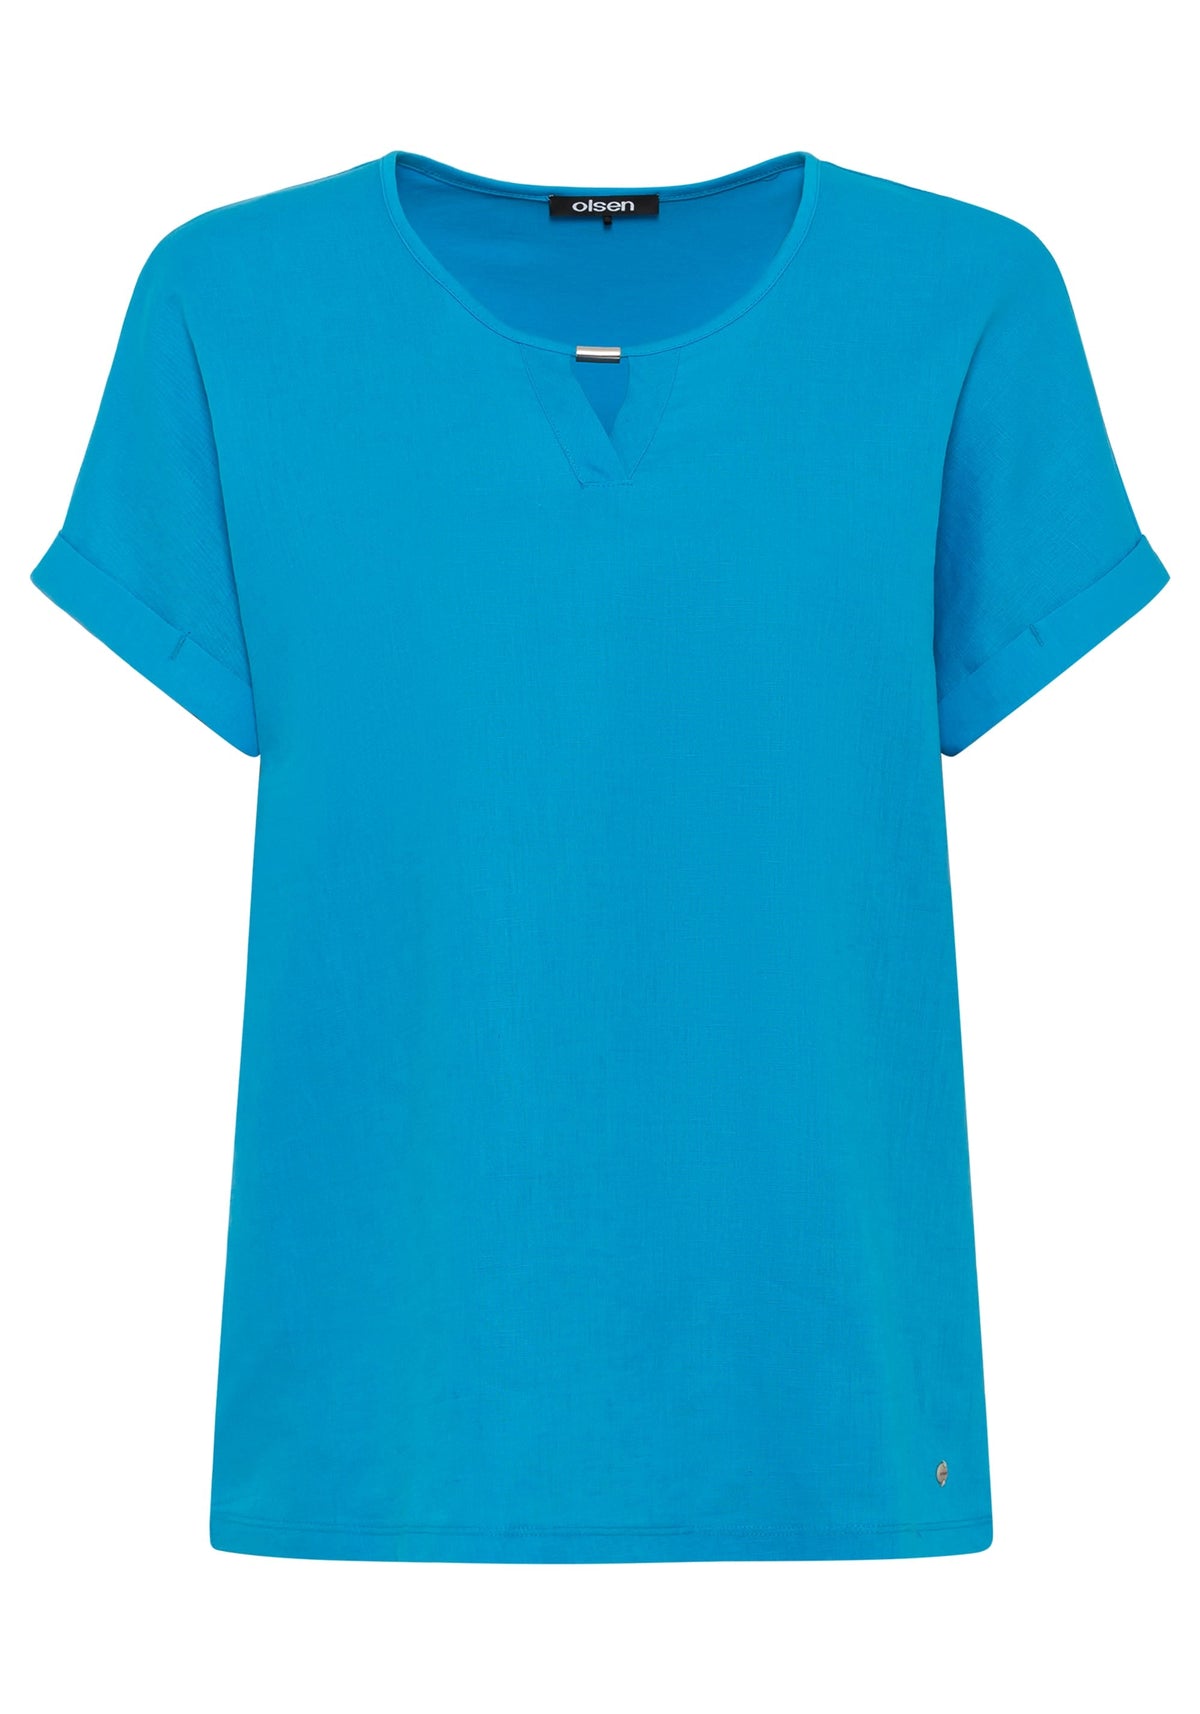 Cotton Linen Short Sleeve Keyhole Neckline T-Shirt containing TENCEL™ Modal